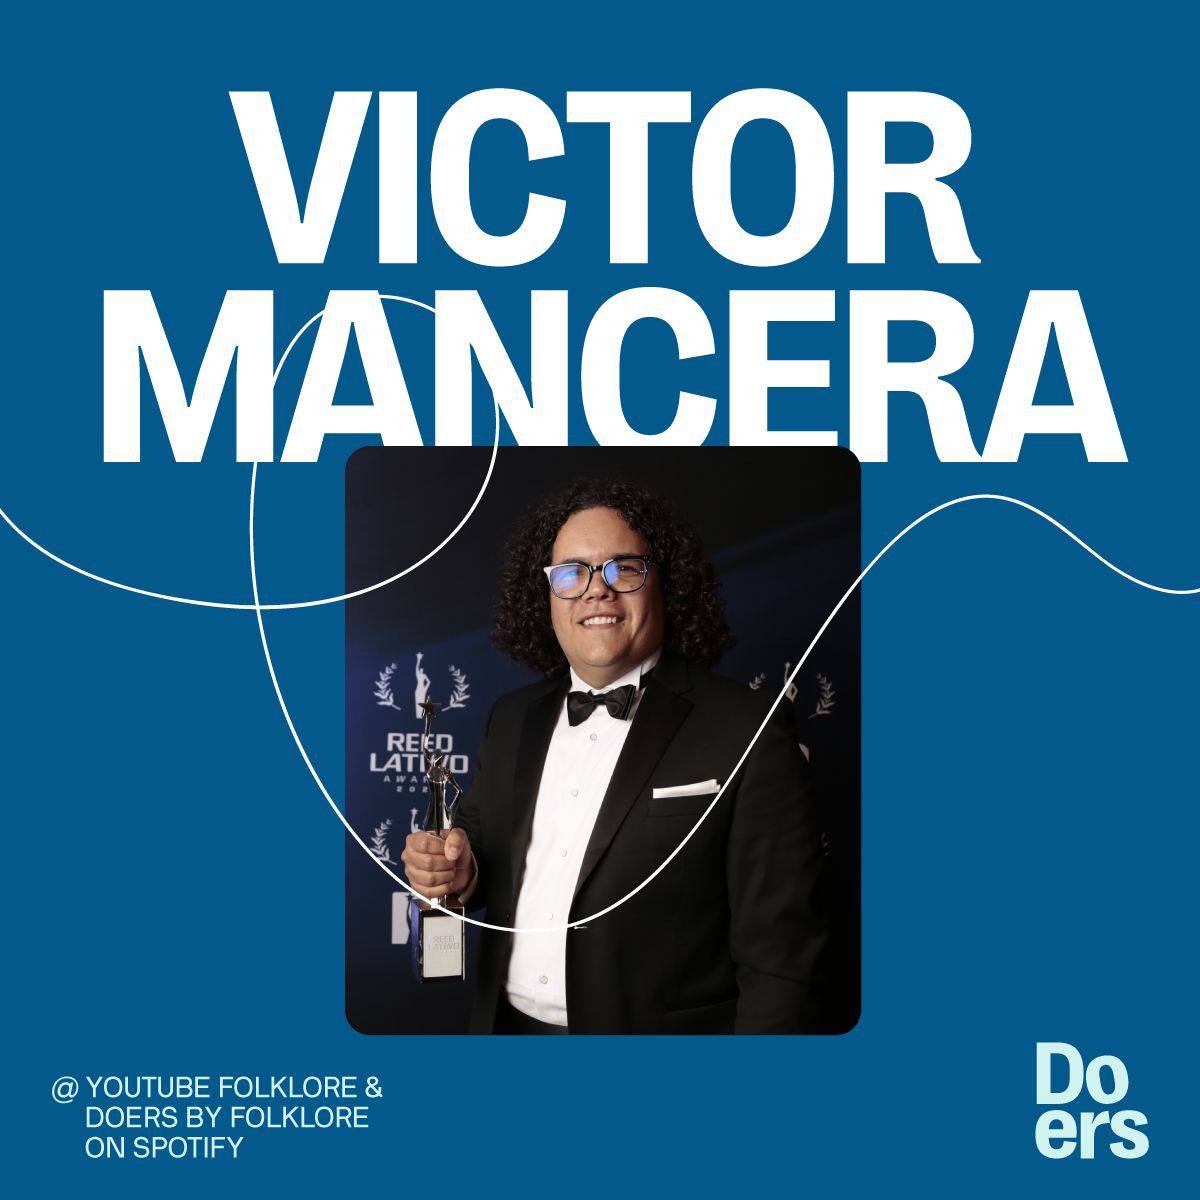 Victor Mancera - ¿Gobernar es saber comunicar?